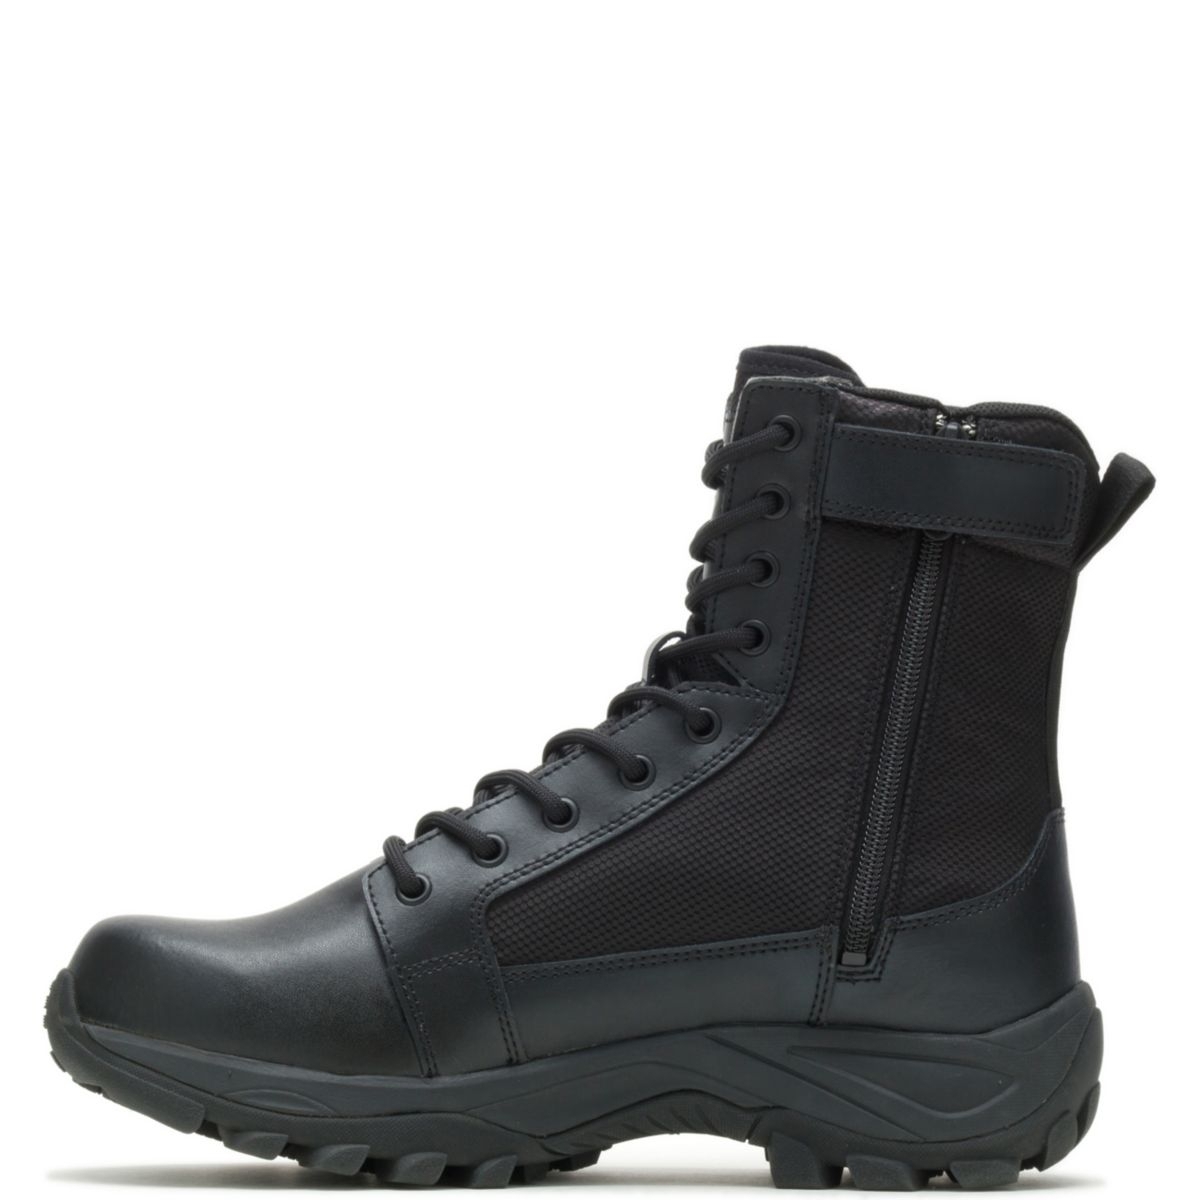 Bates Men's Fuse 8-inch Side Zip Waterproof Boot Black - E06508 BLACK - BLACK, 12